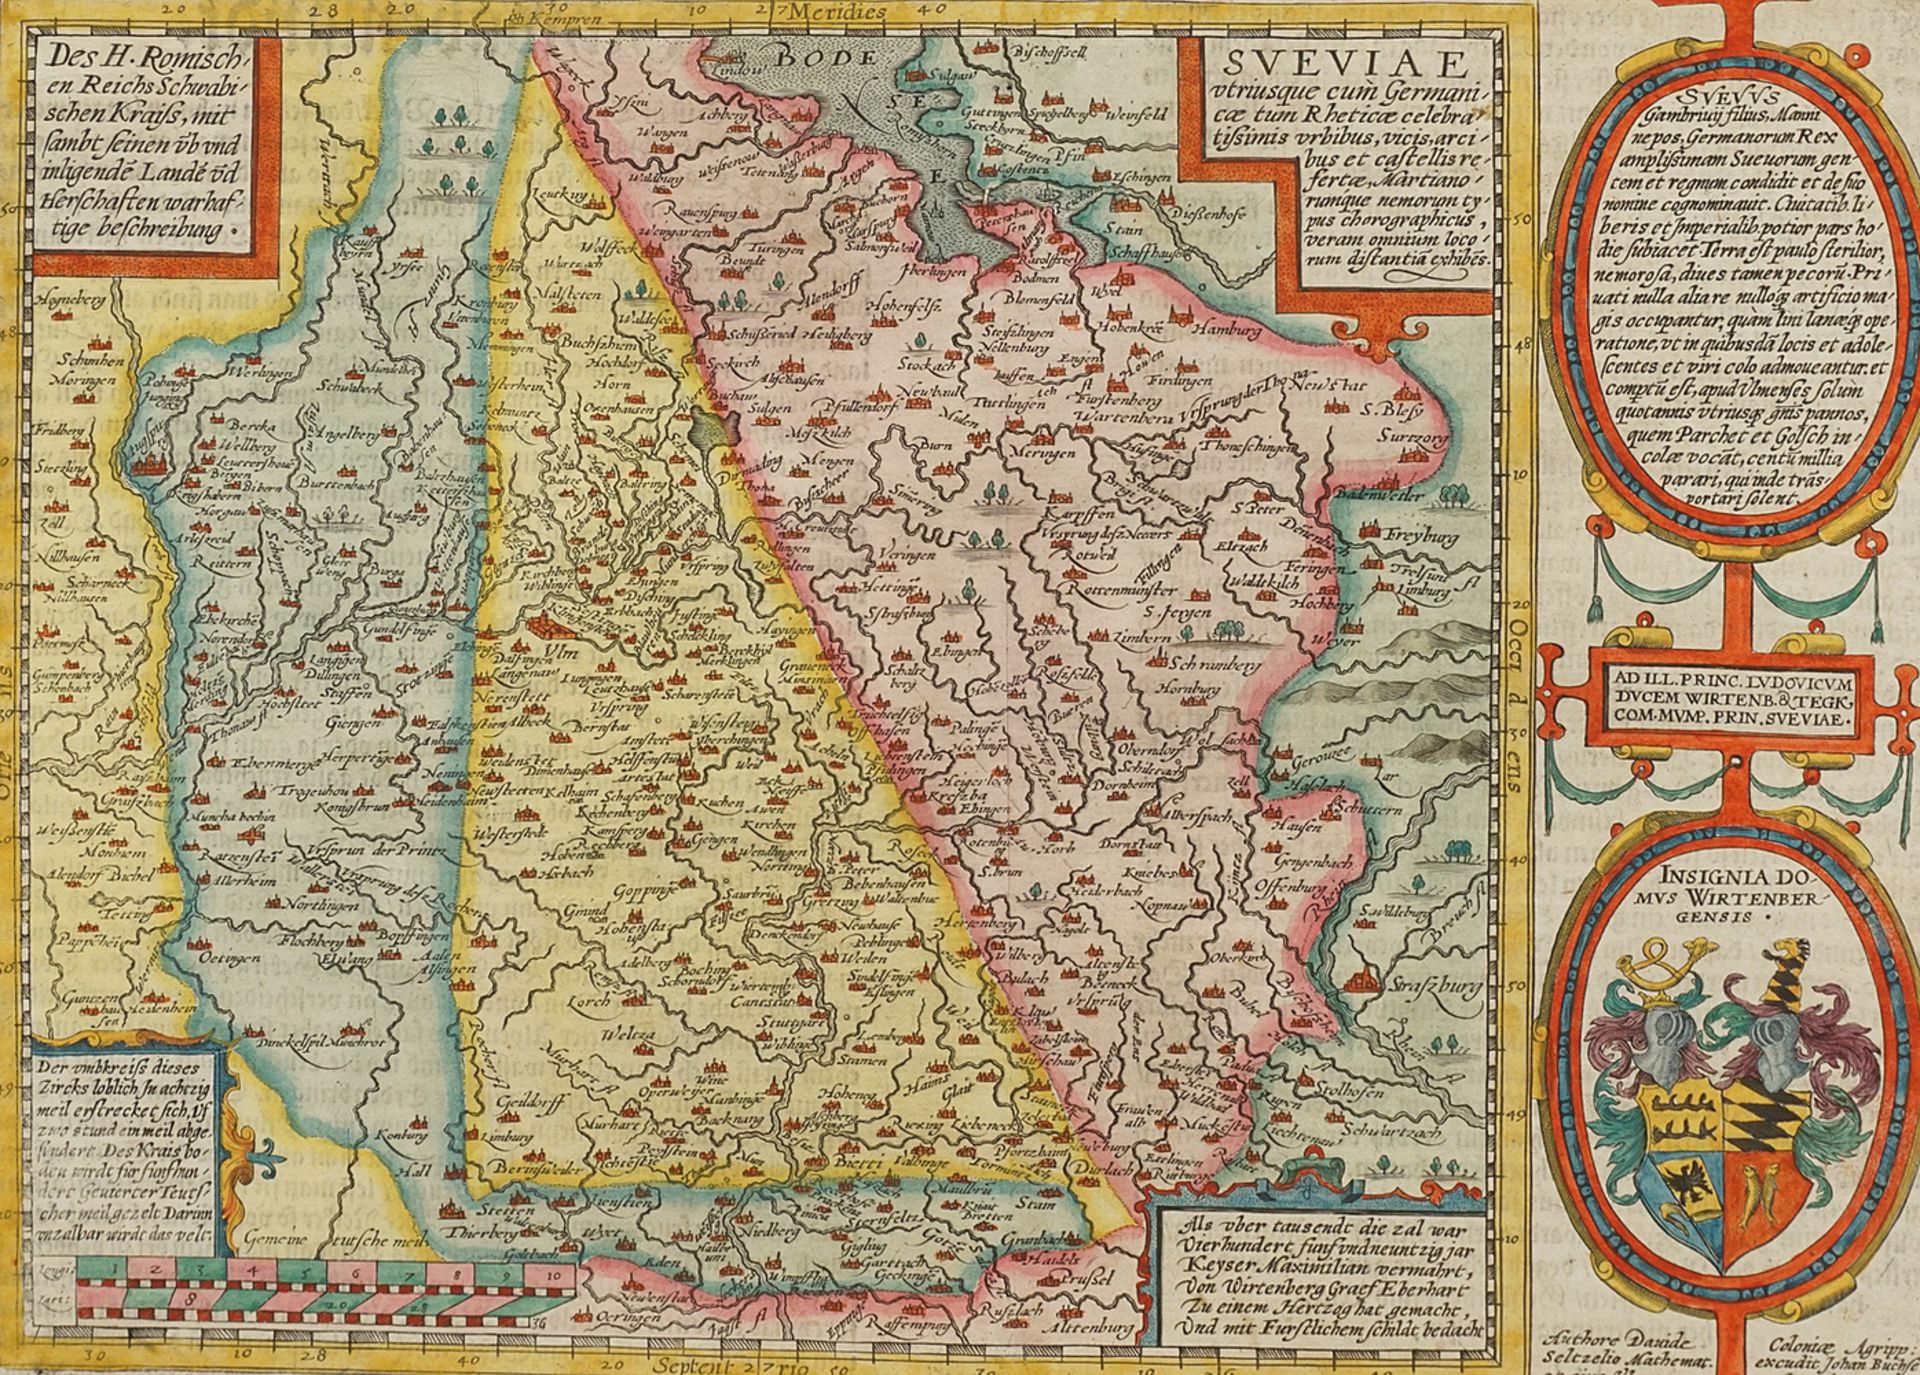 Mat(t)hias Quad (1557-1613), Map of Swabia